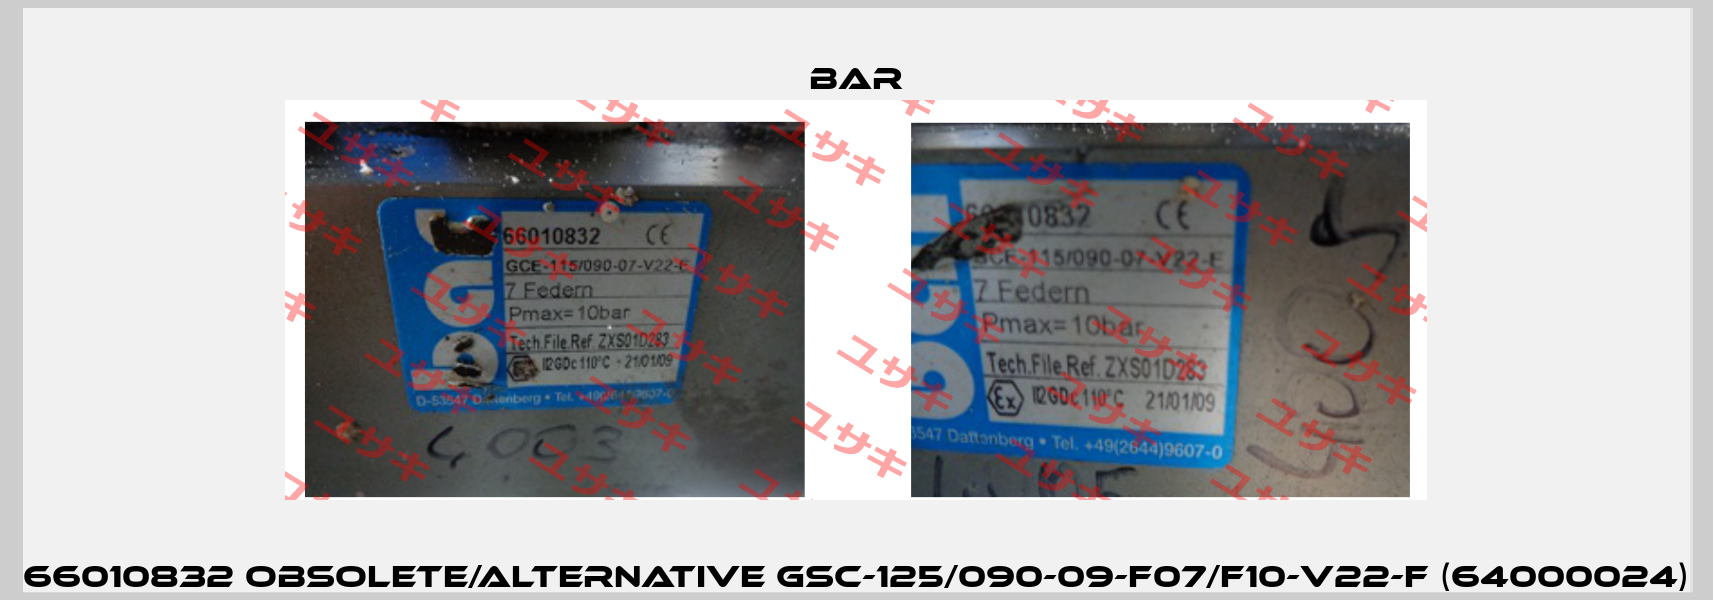 66010832 obsolete/alternative GSC-125/090-09-F07/F10-V22-F (64000024) bar